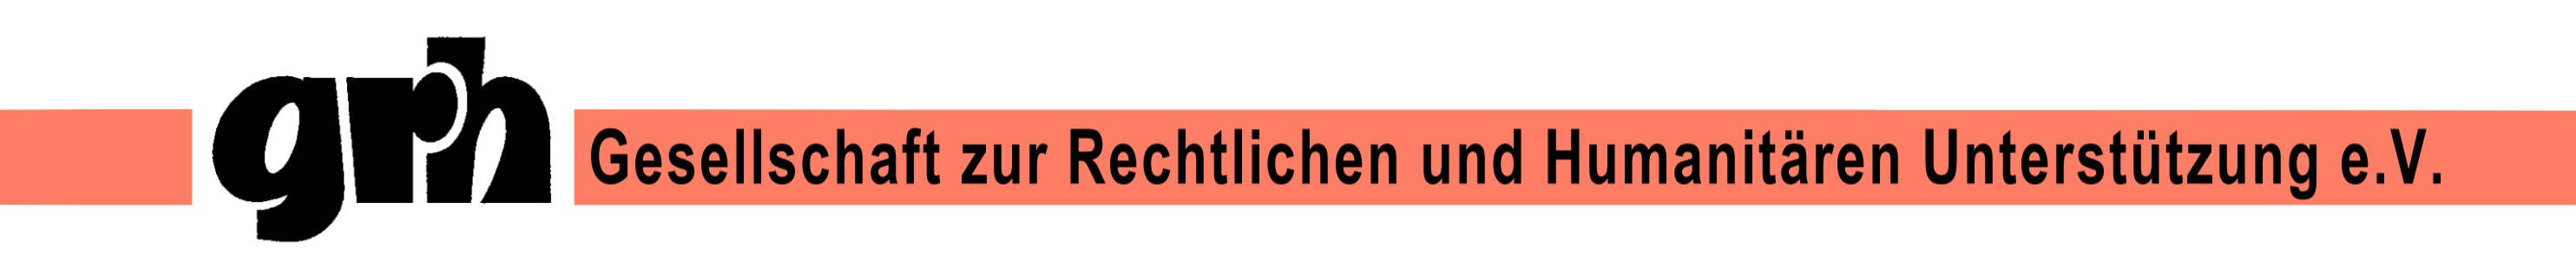 GRH-Logo_html_m114801b8